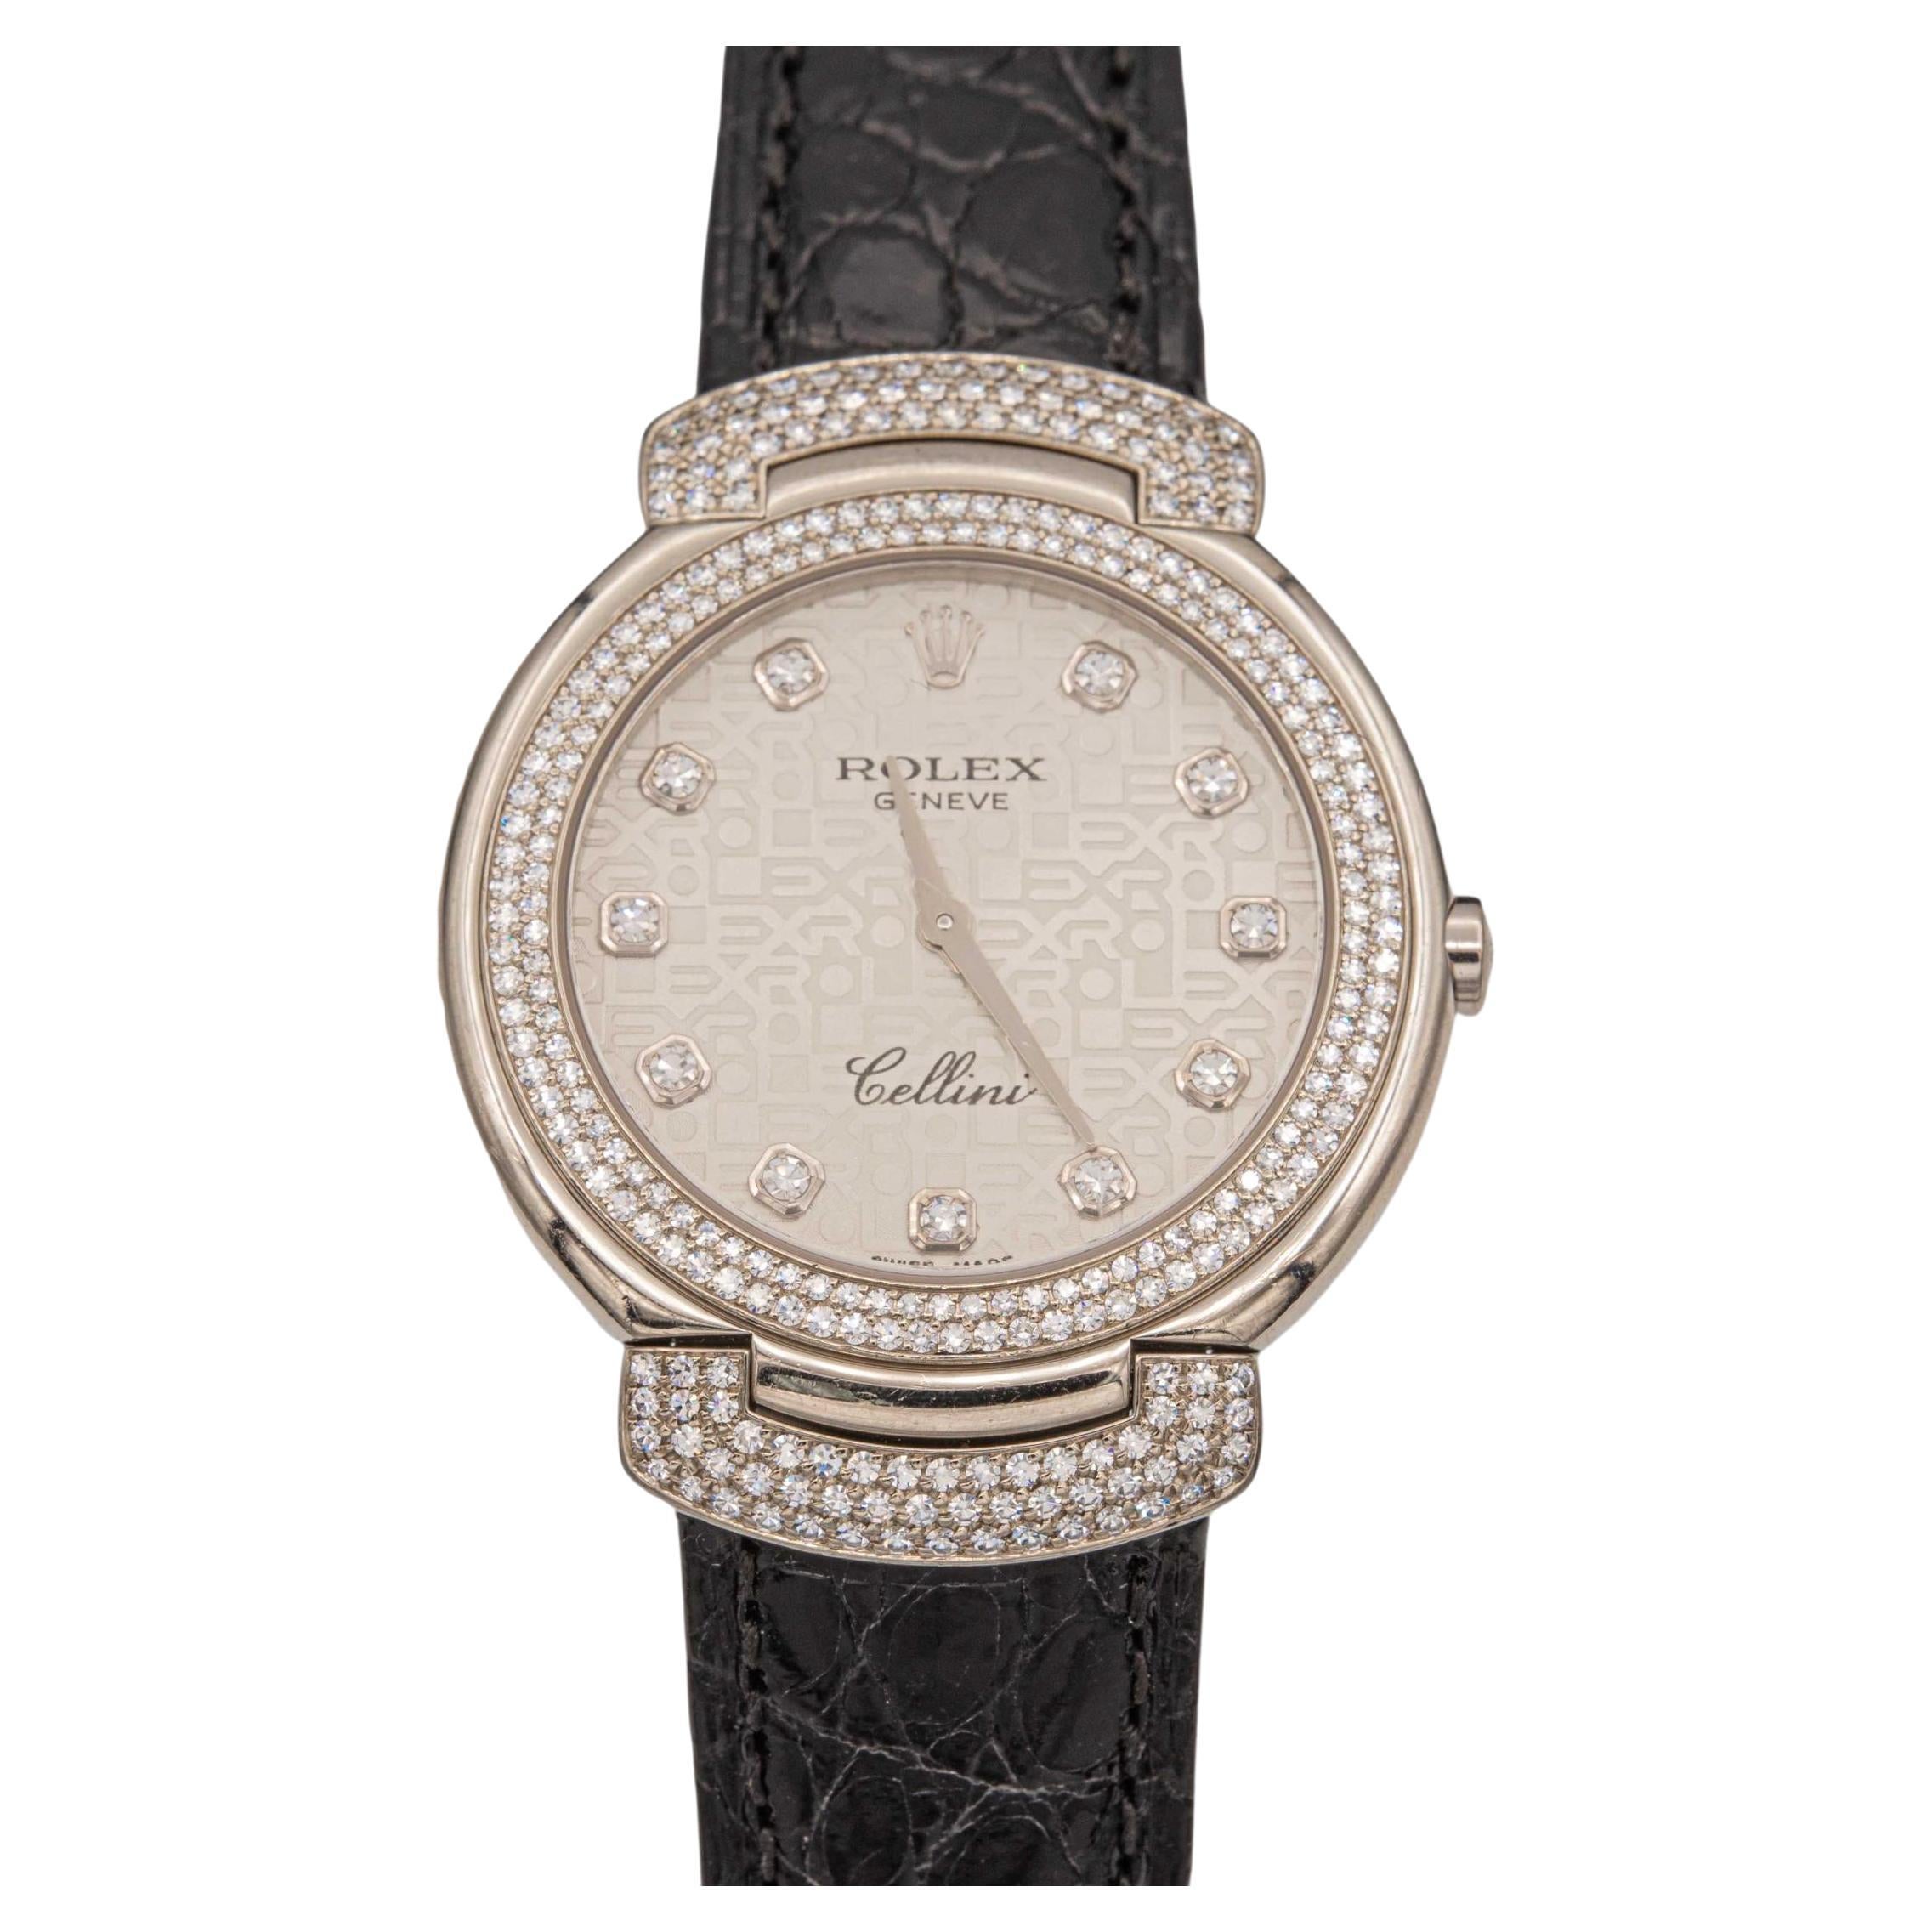 Rolex Cellini Cellissima 18k White Gold Diamond Quartz Movement Ladies6683 Watch